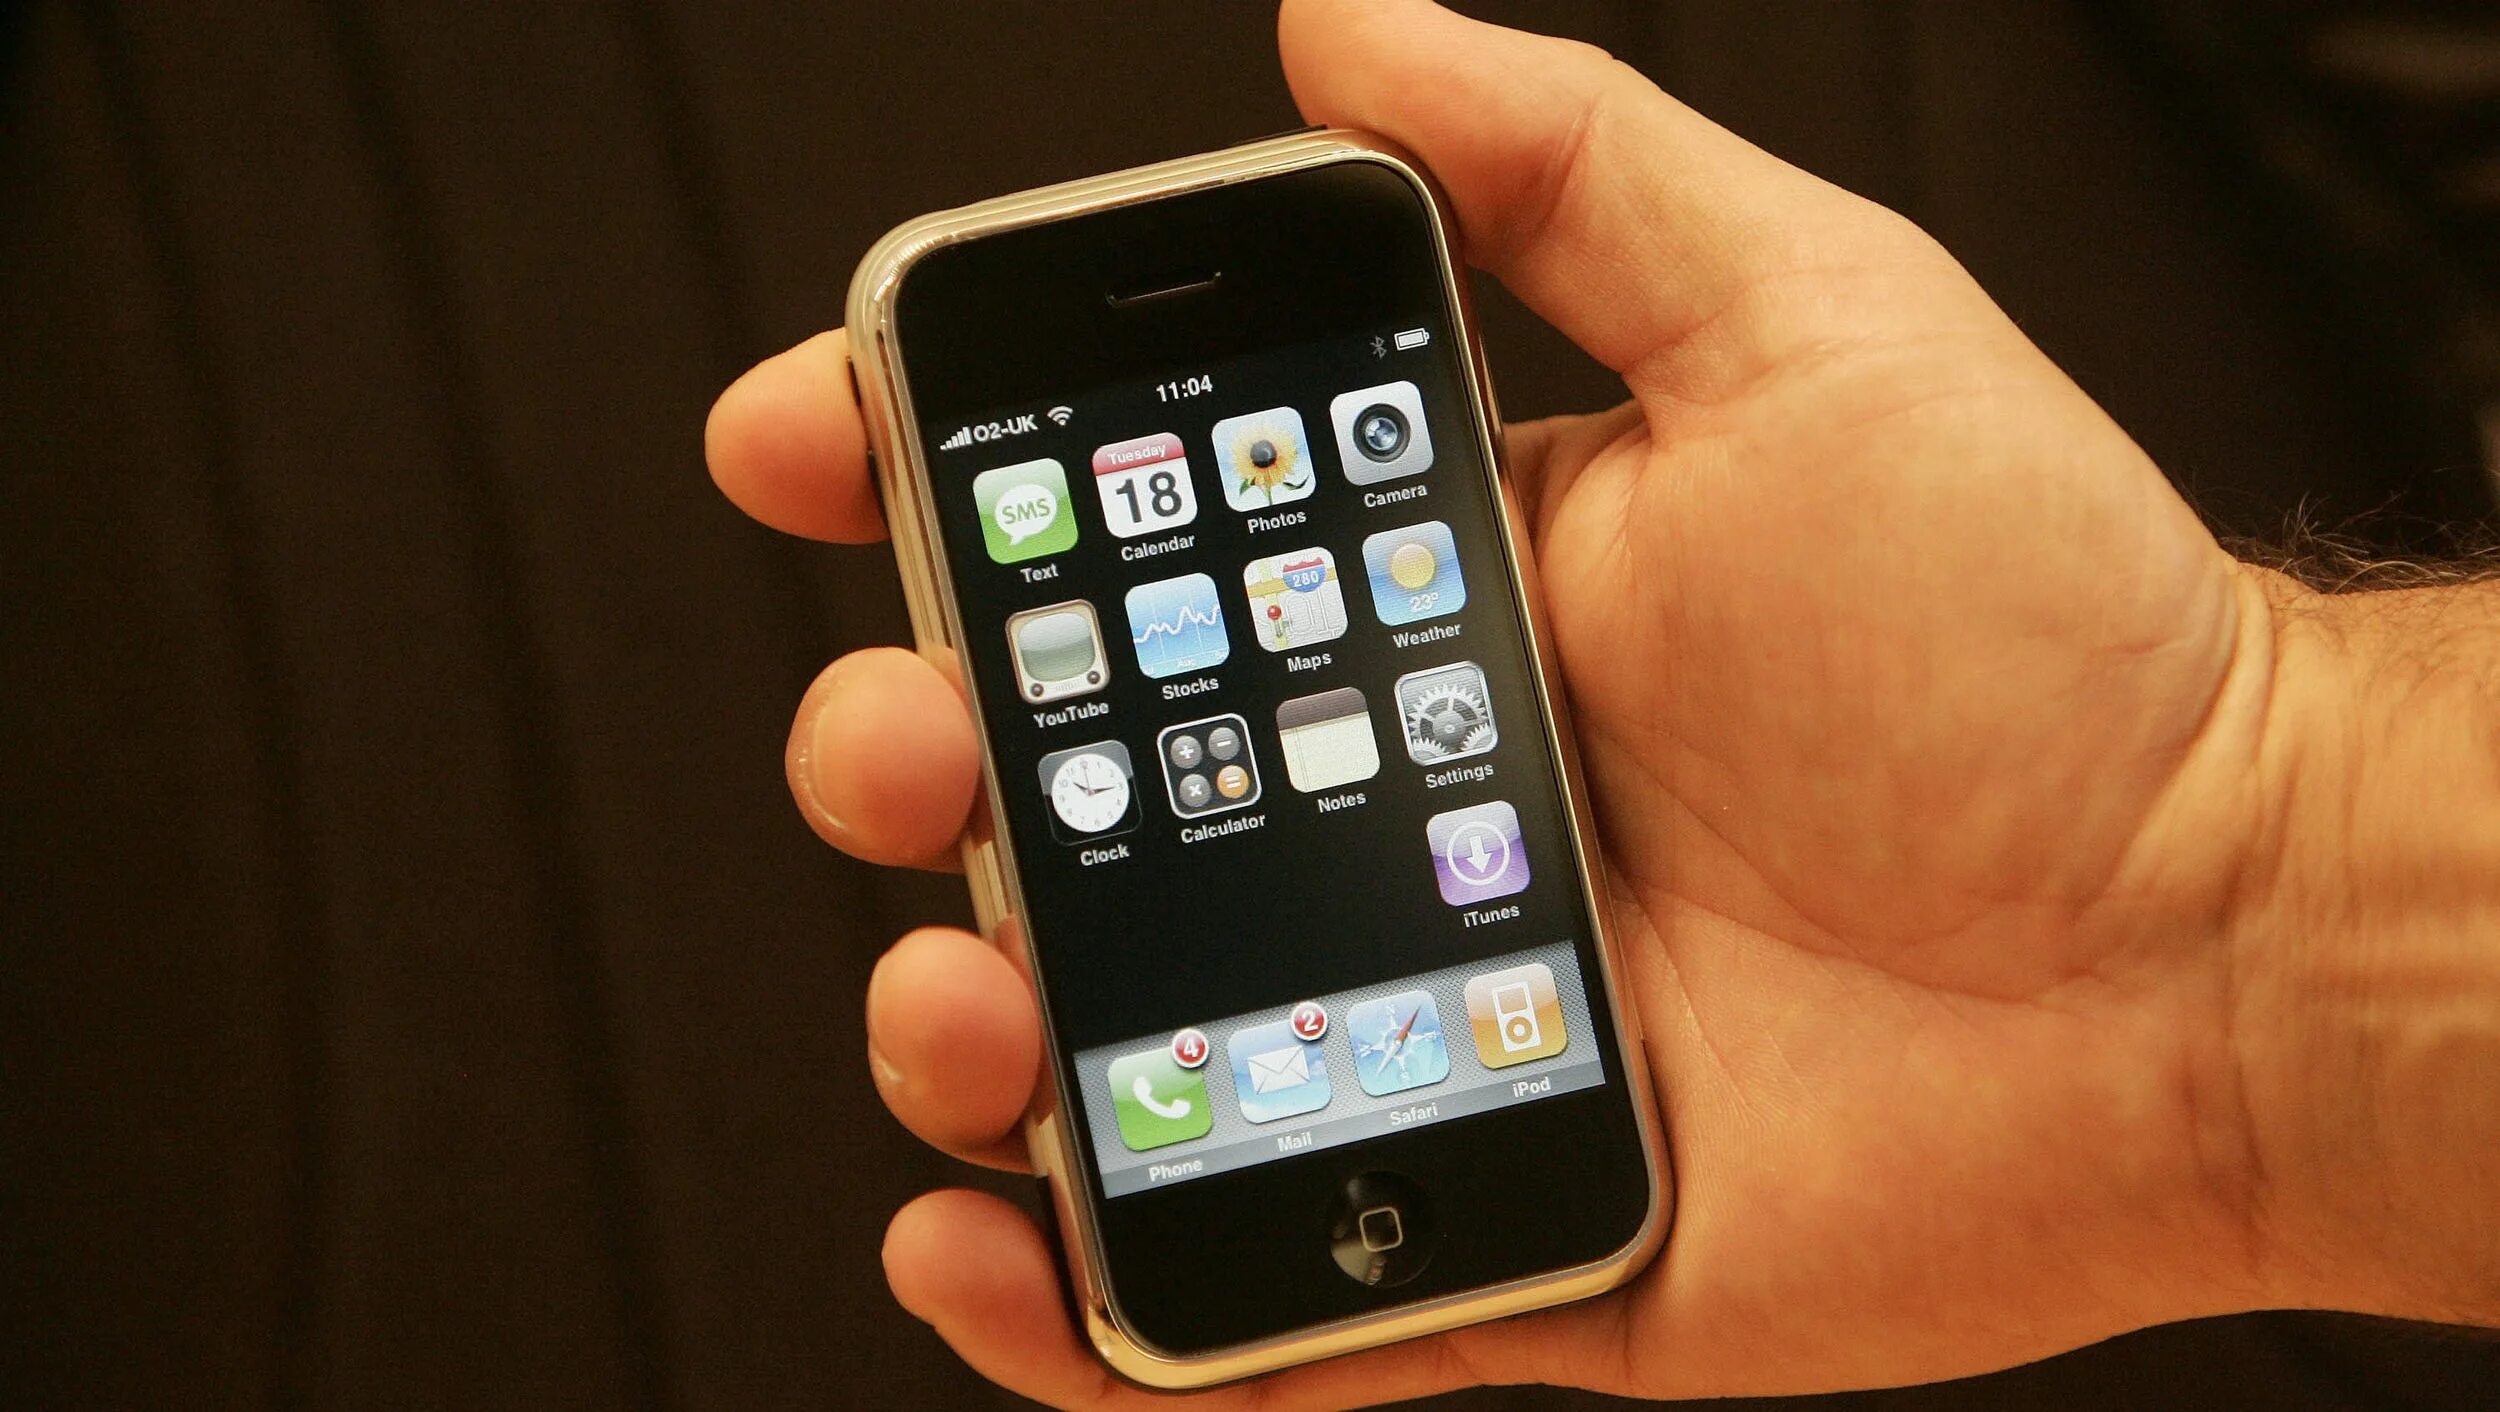 Apple iphone 1. Айфон 1g. Айфон 1 2007. Айфон 2007 года.